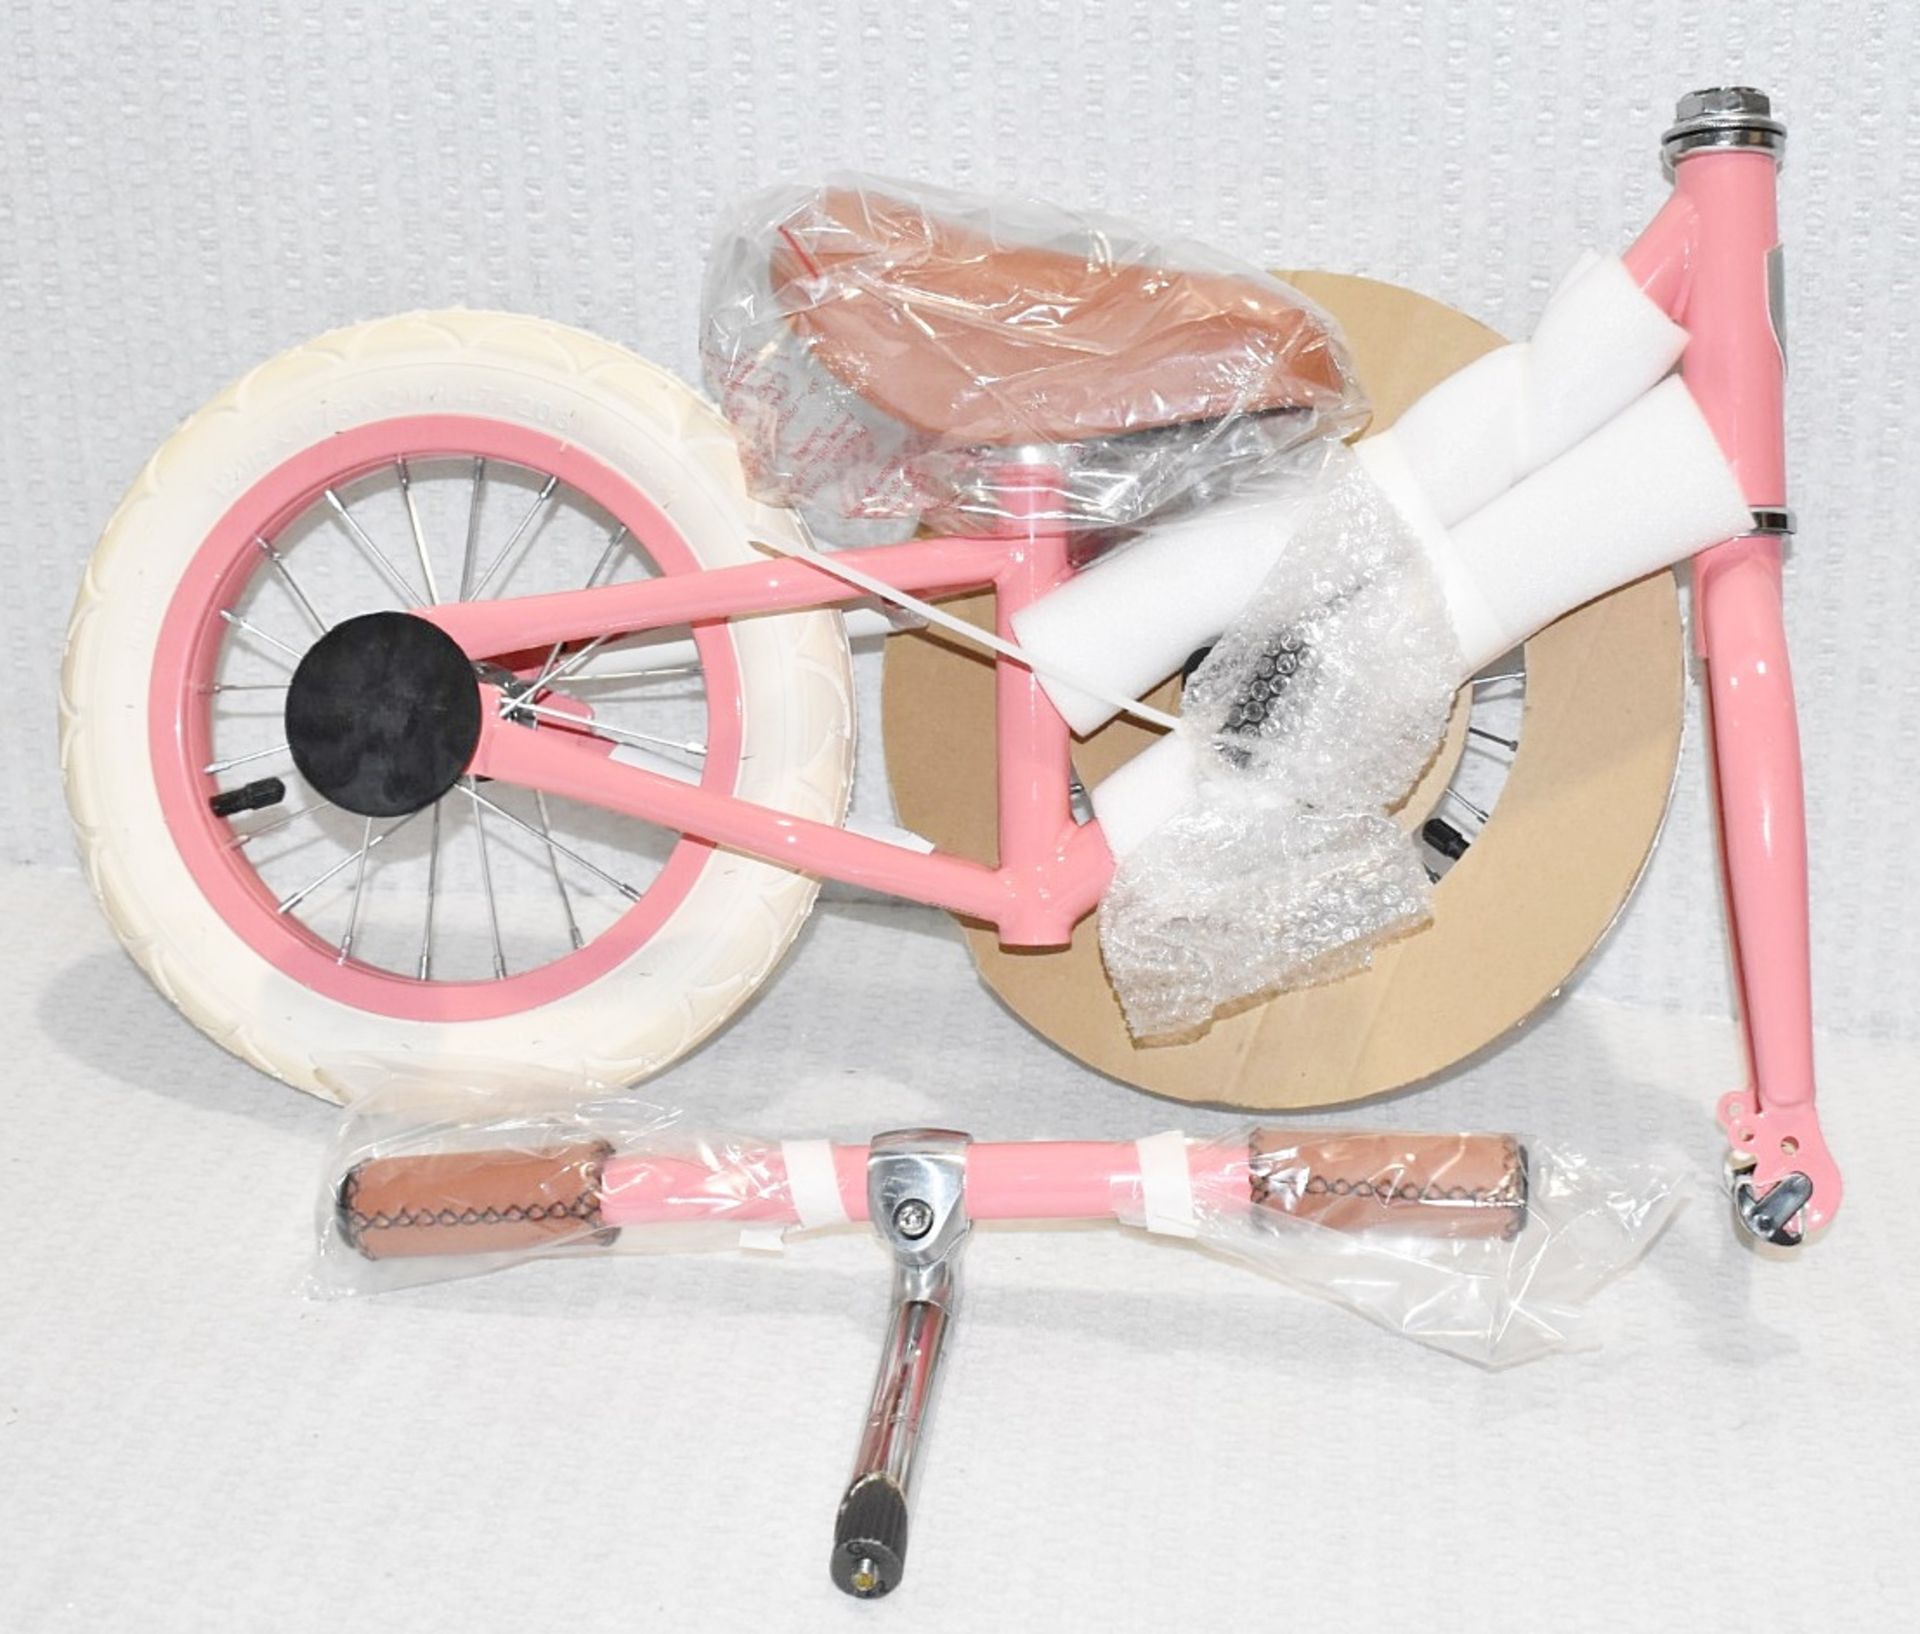 1 x BANWOOD Child's Balance Bike in Coral Pink - Original Price £139.00 - Image 7 of 9